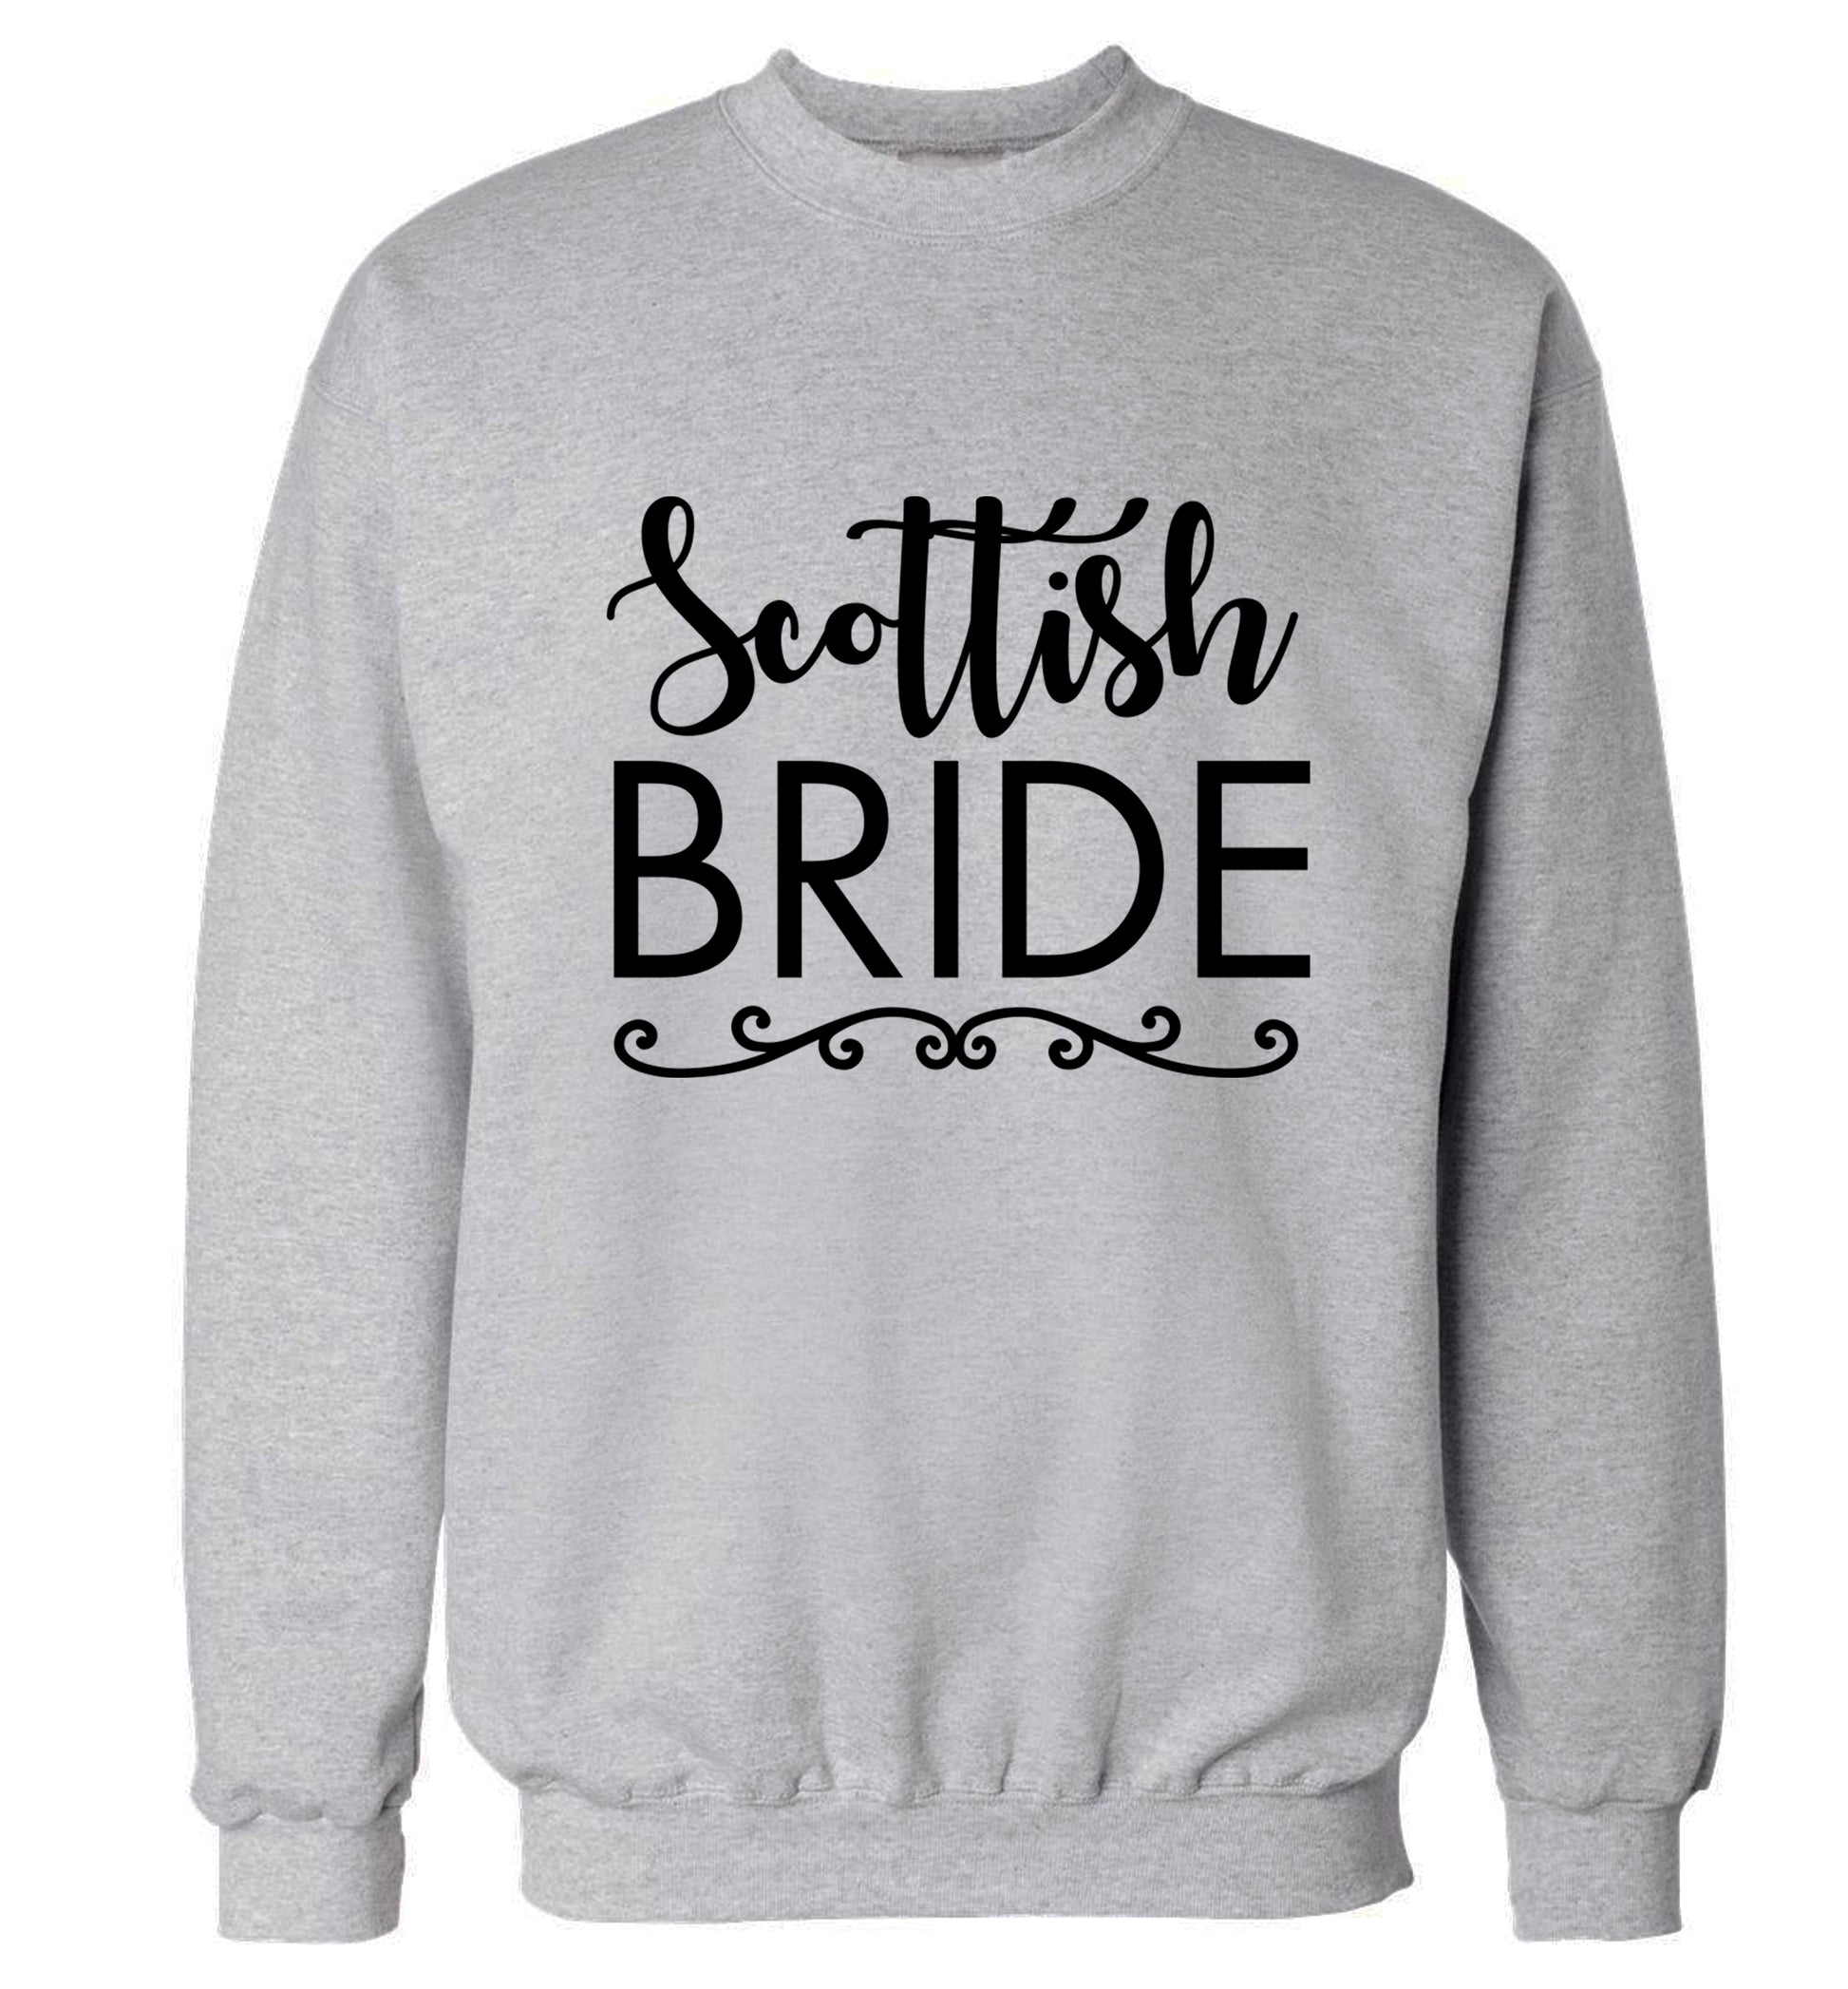 Scottish Bride Adult's unisex grey Sweater 2XL